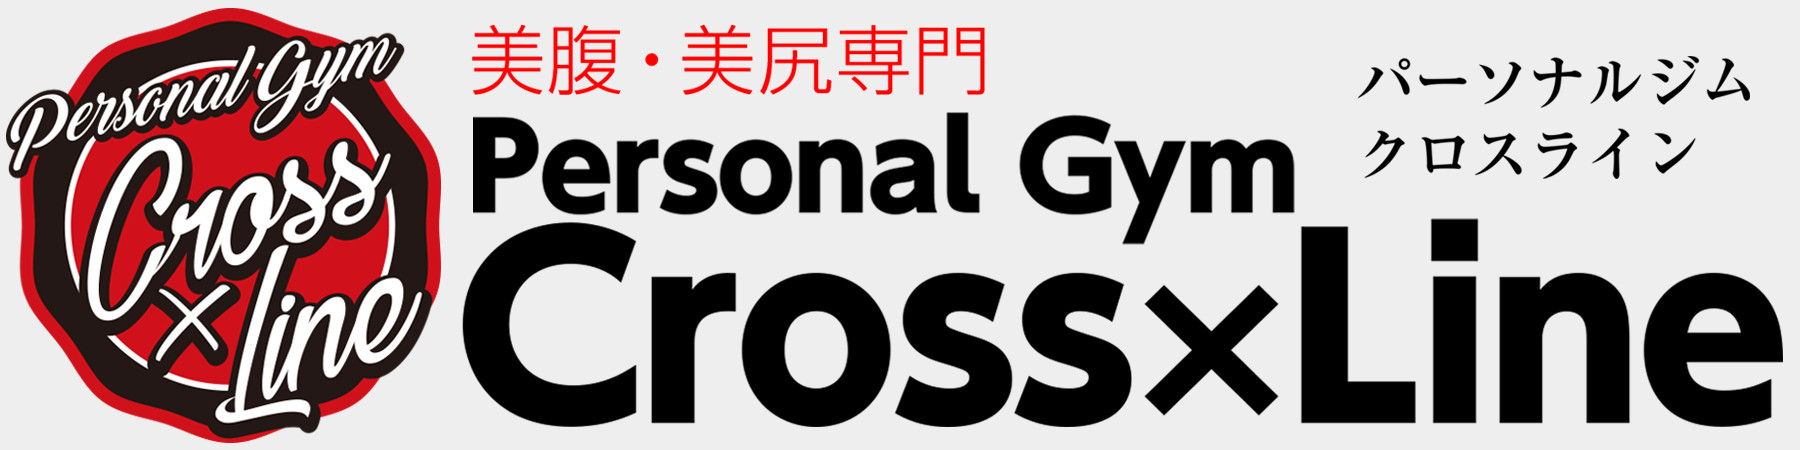 Personal Gym Cross×Line